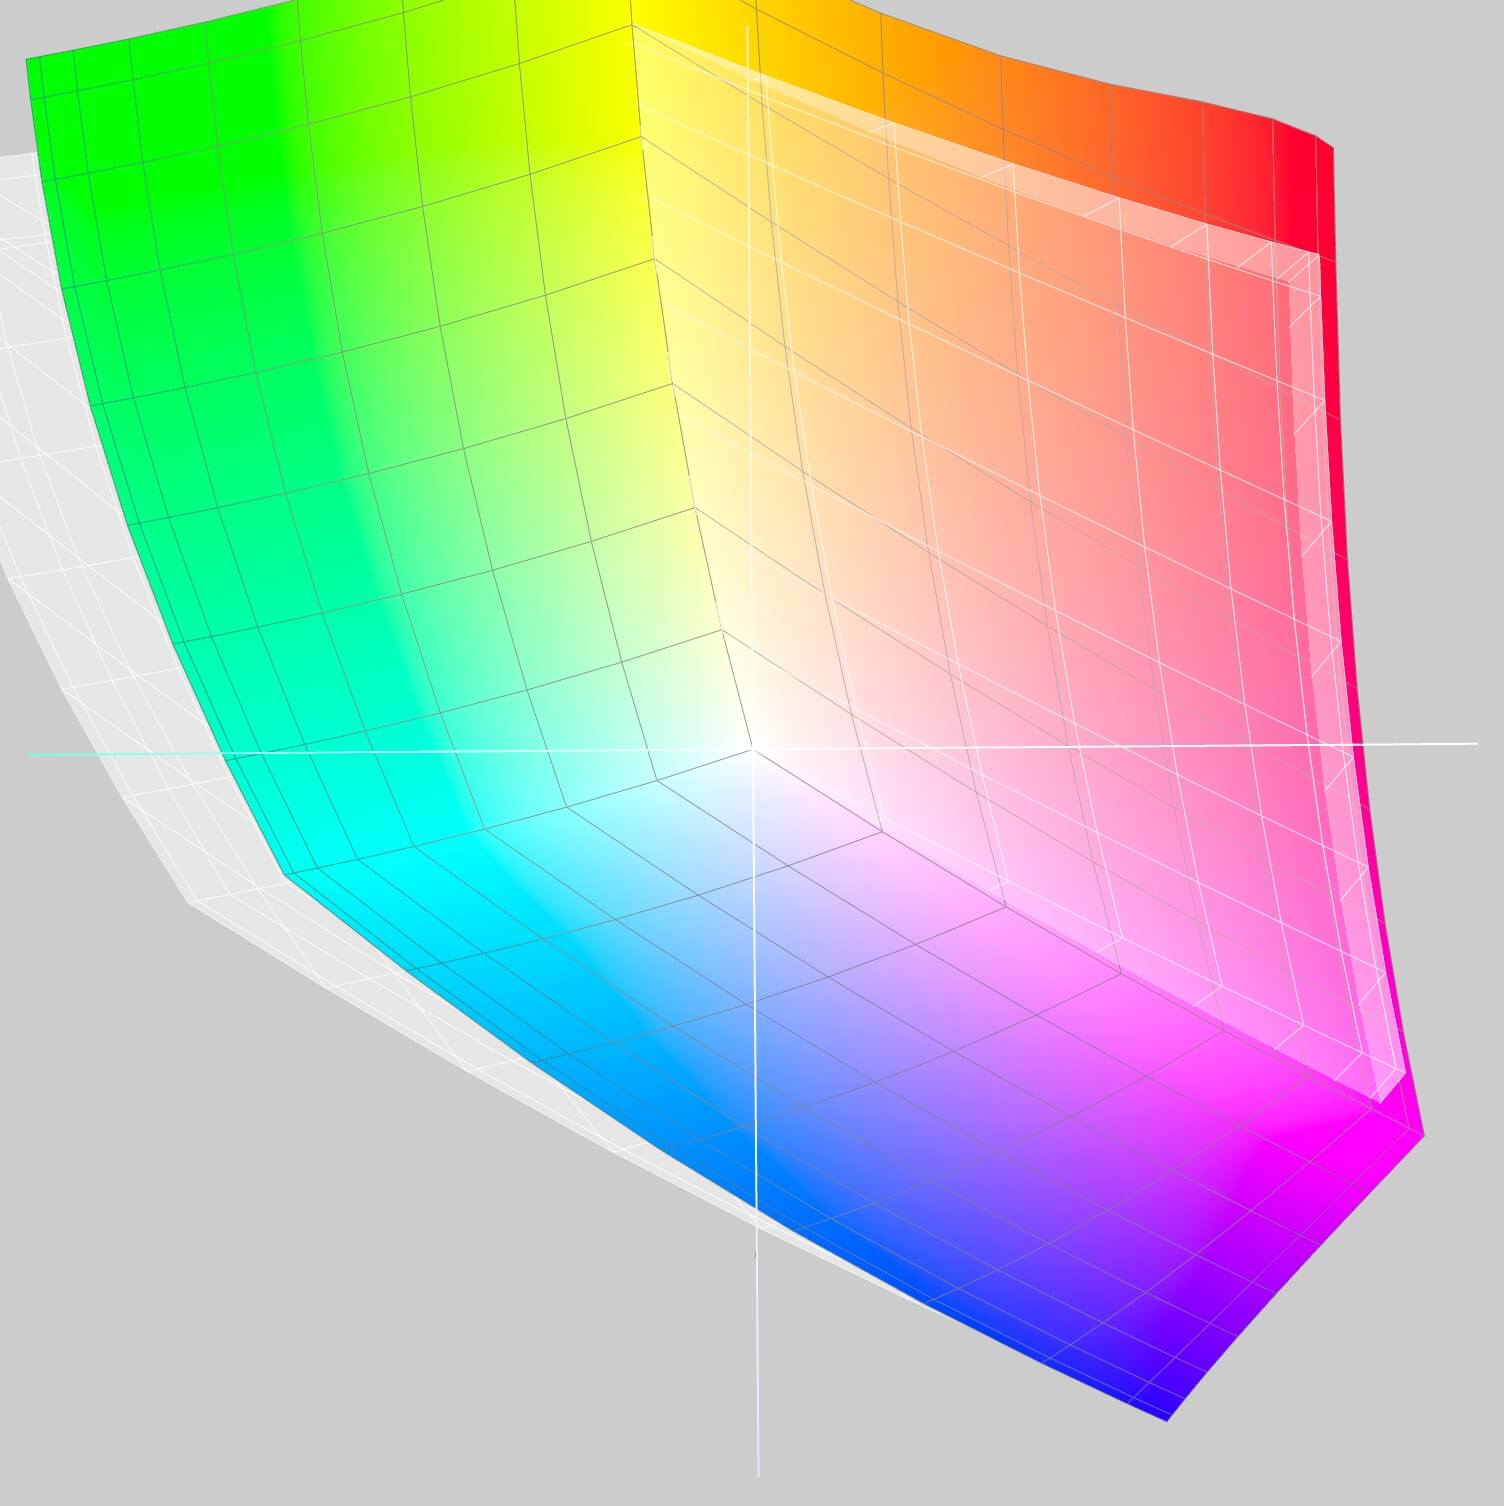 Porovnání gamutu Adobe RGB a Display P3 na Lab grafu (barevně je vykreslený Display P3, šedě na pozadí Adobe RGB)